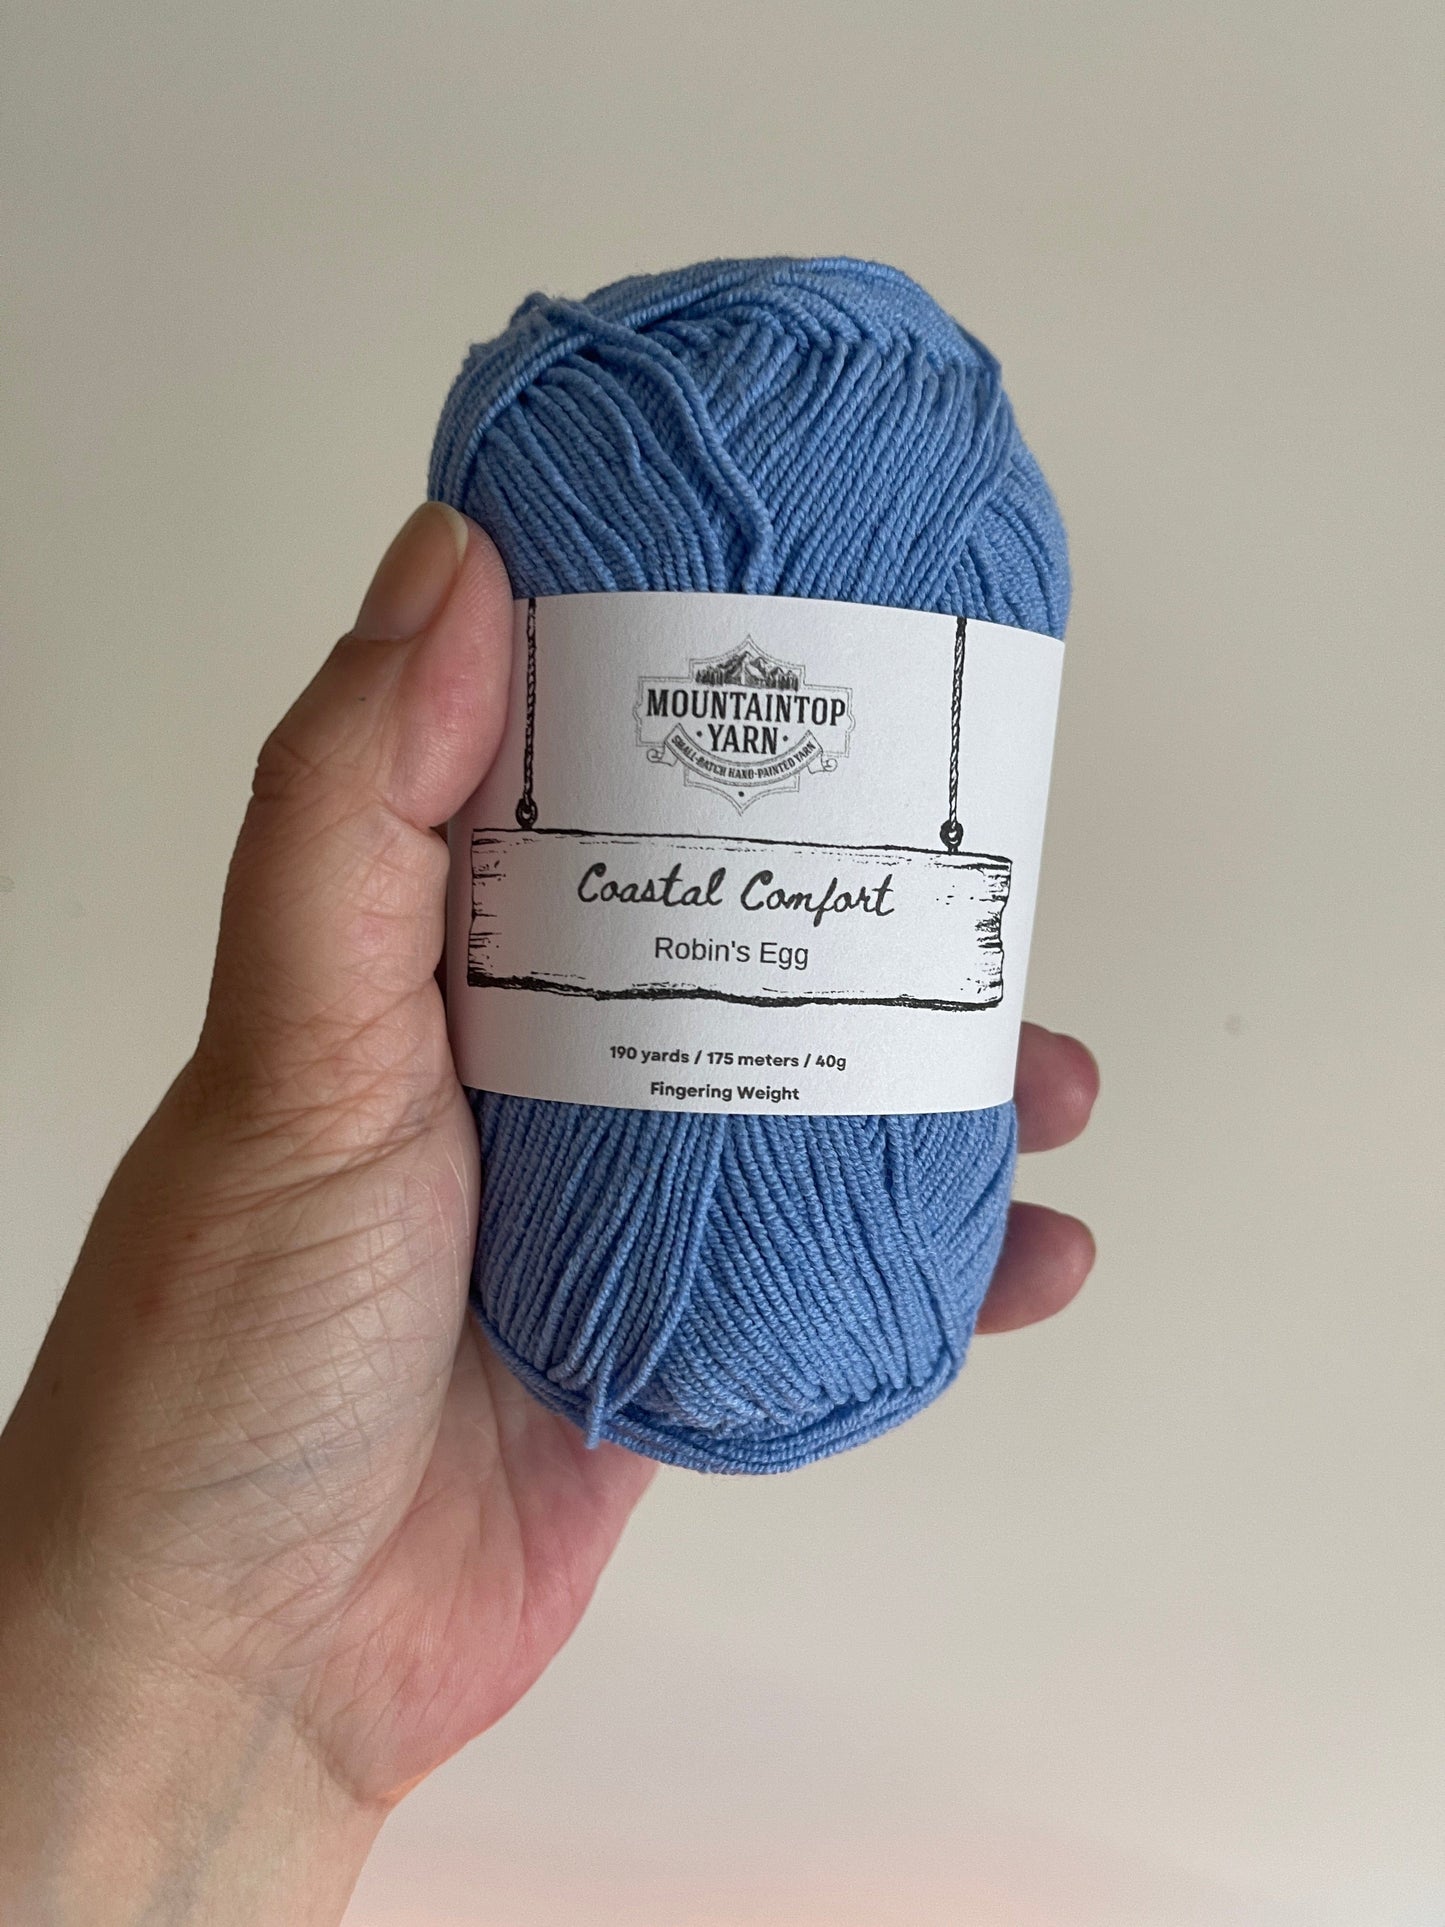 Mountaintop Yarn Robin's Egg Coastal Comfort - Cotton and Acrylic Blend Yarn Yarn